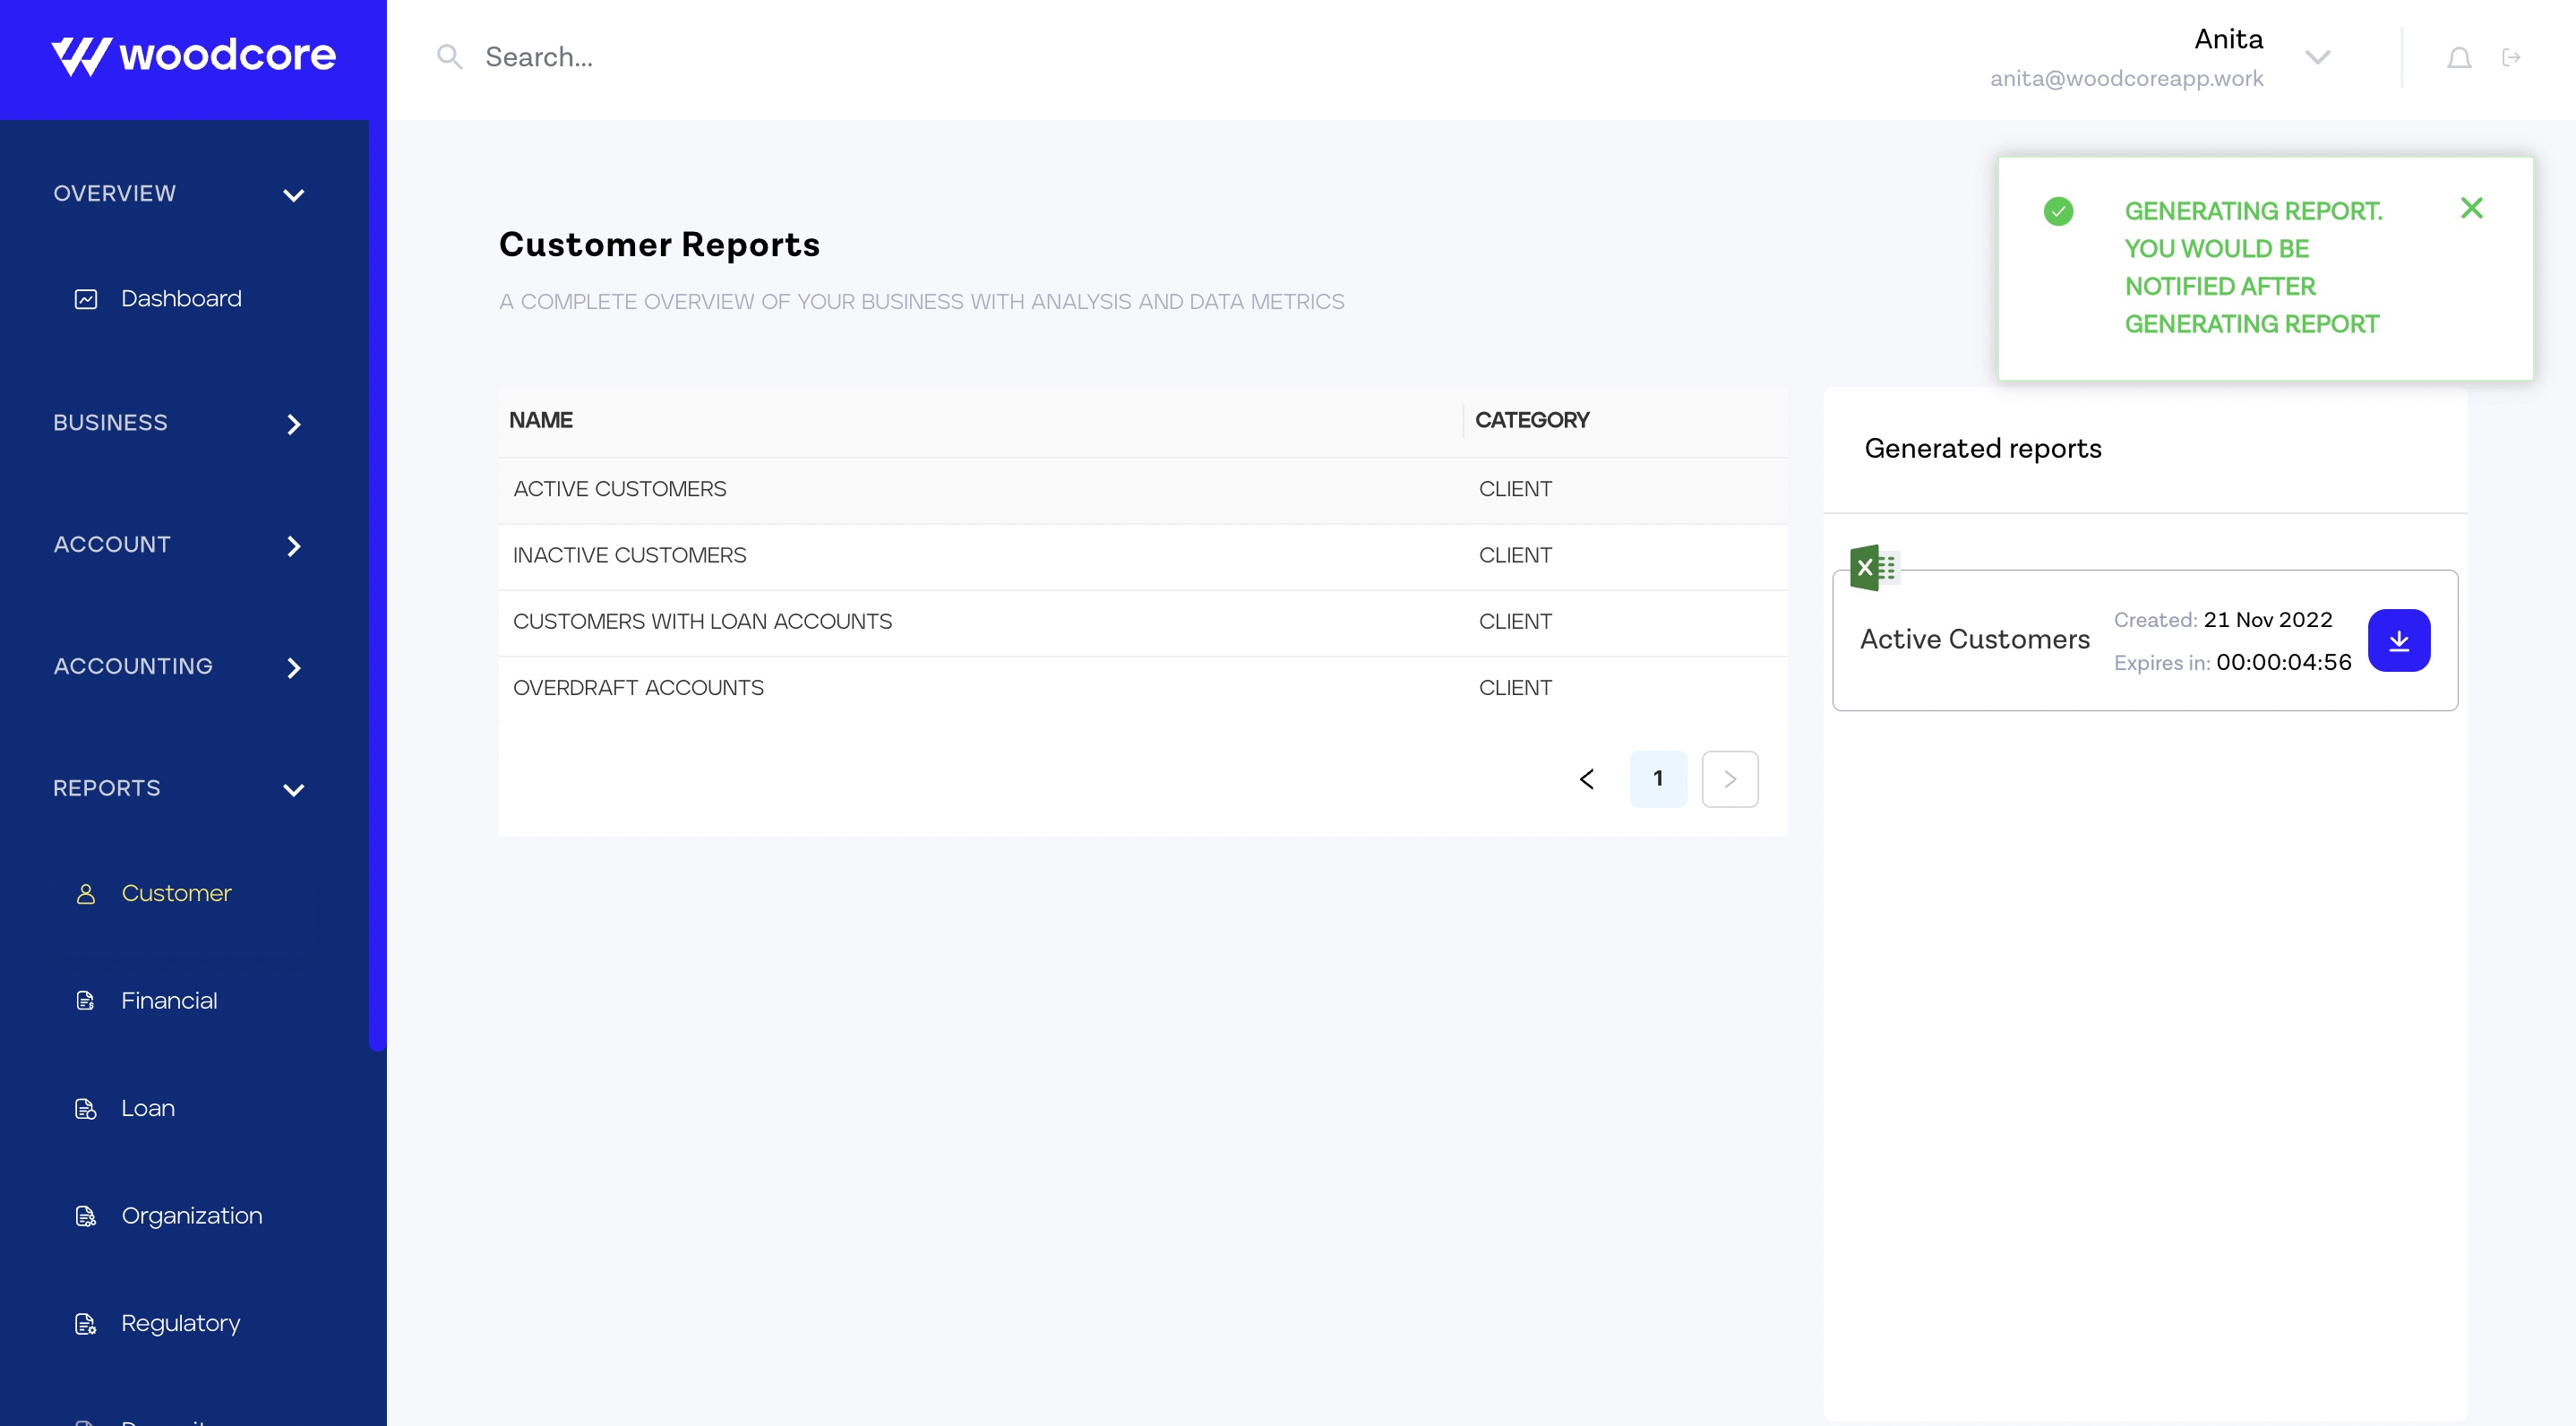 Generating customer reports

